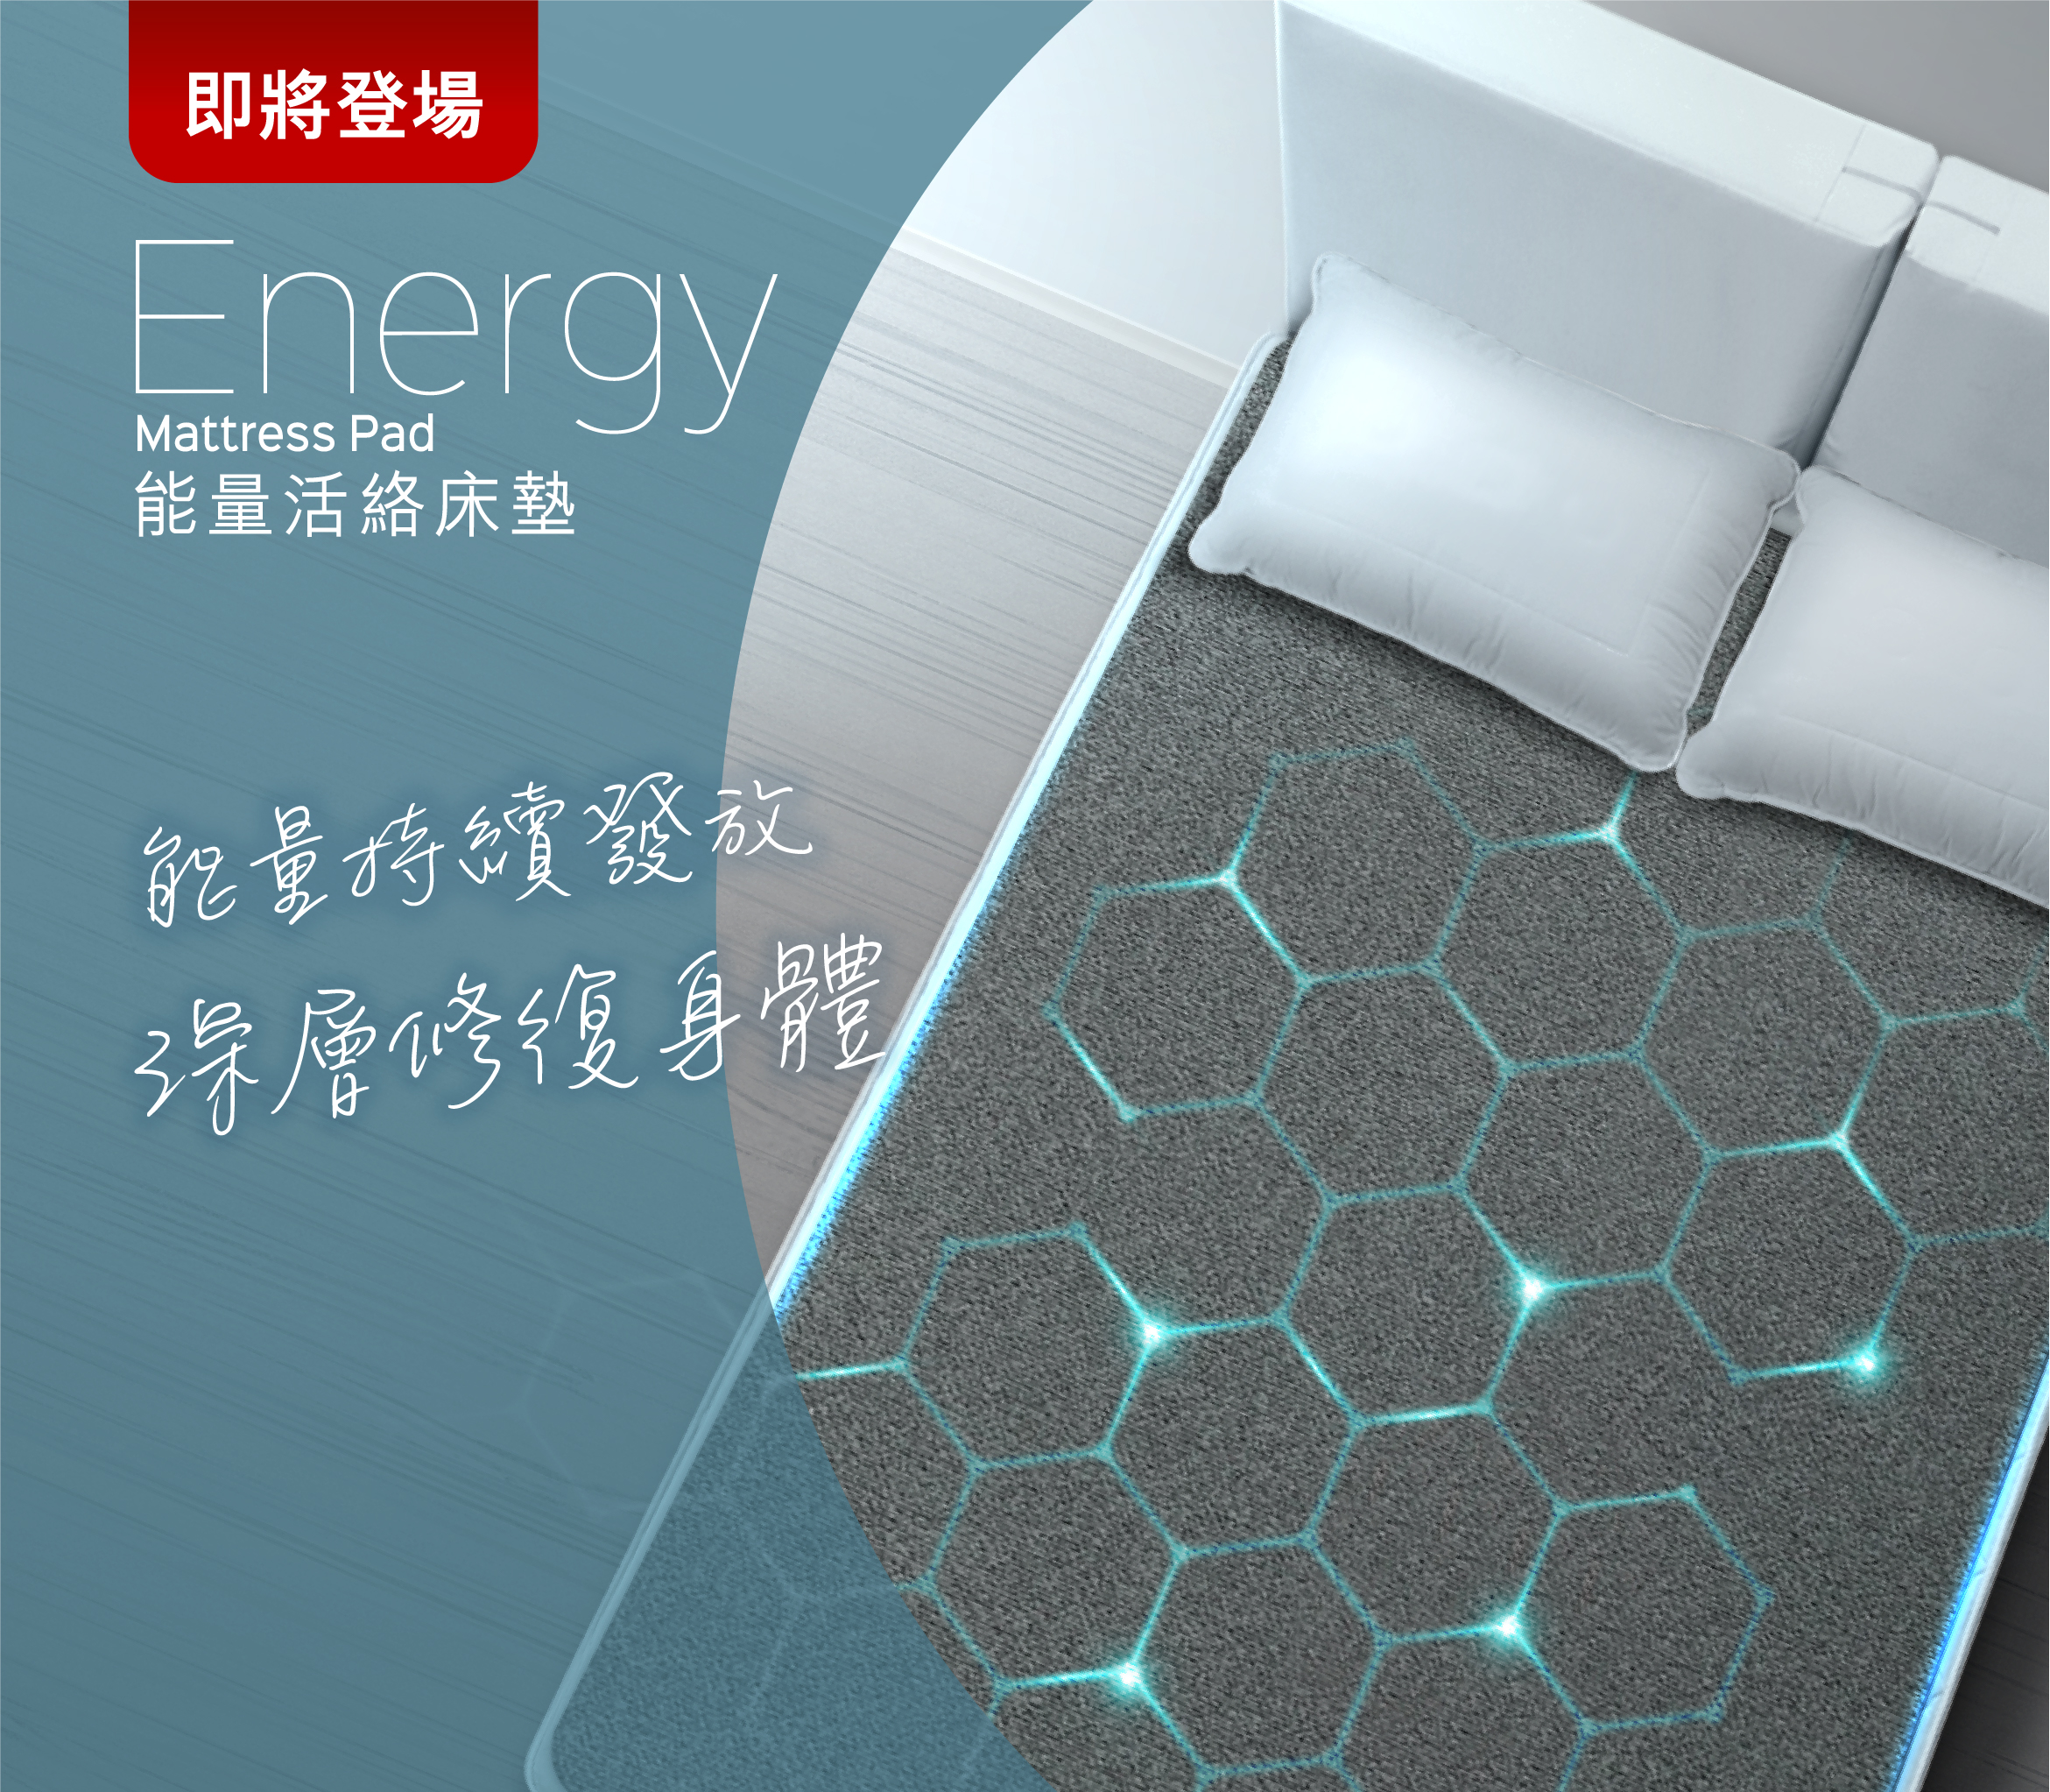 Energy Mattress Pad Related Homepage Hero Mobile@2x 100 1